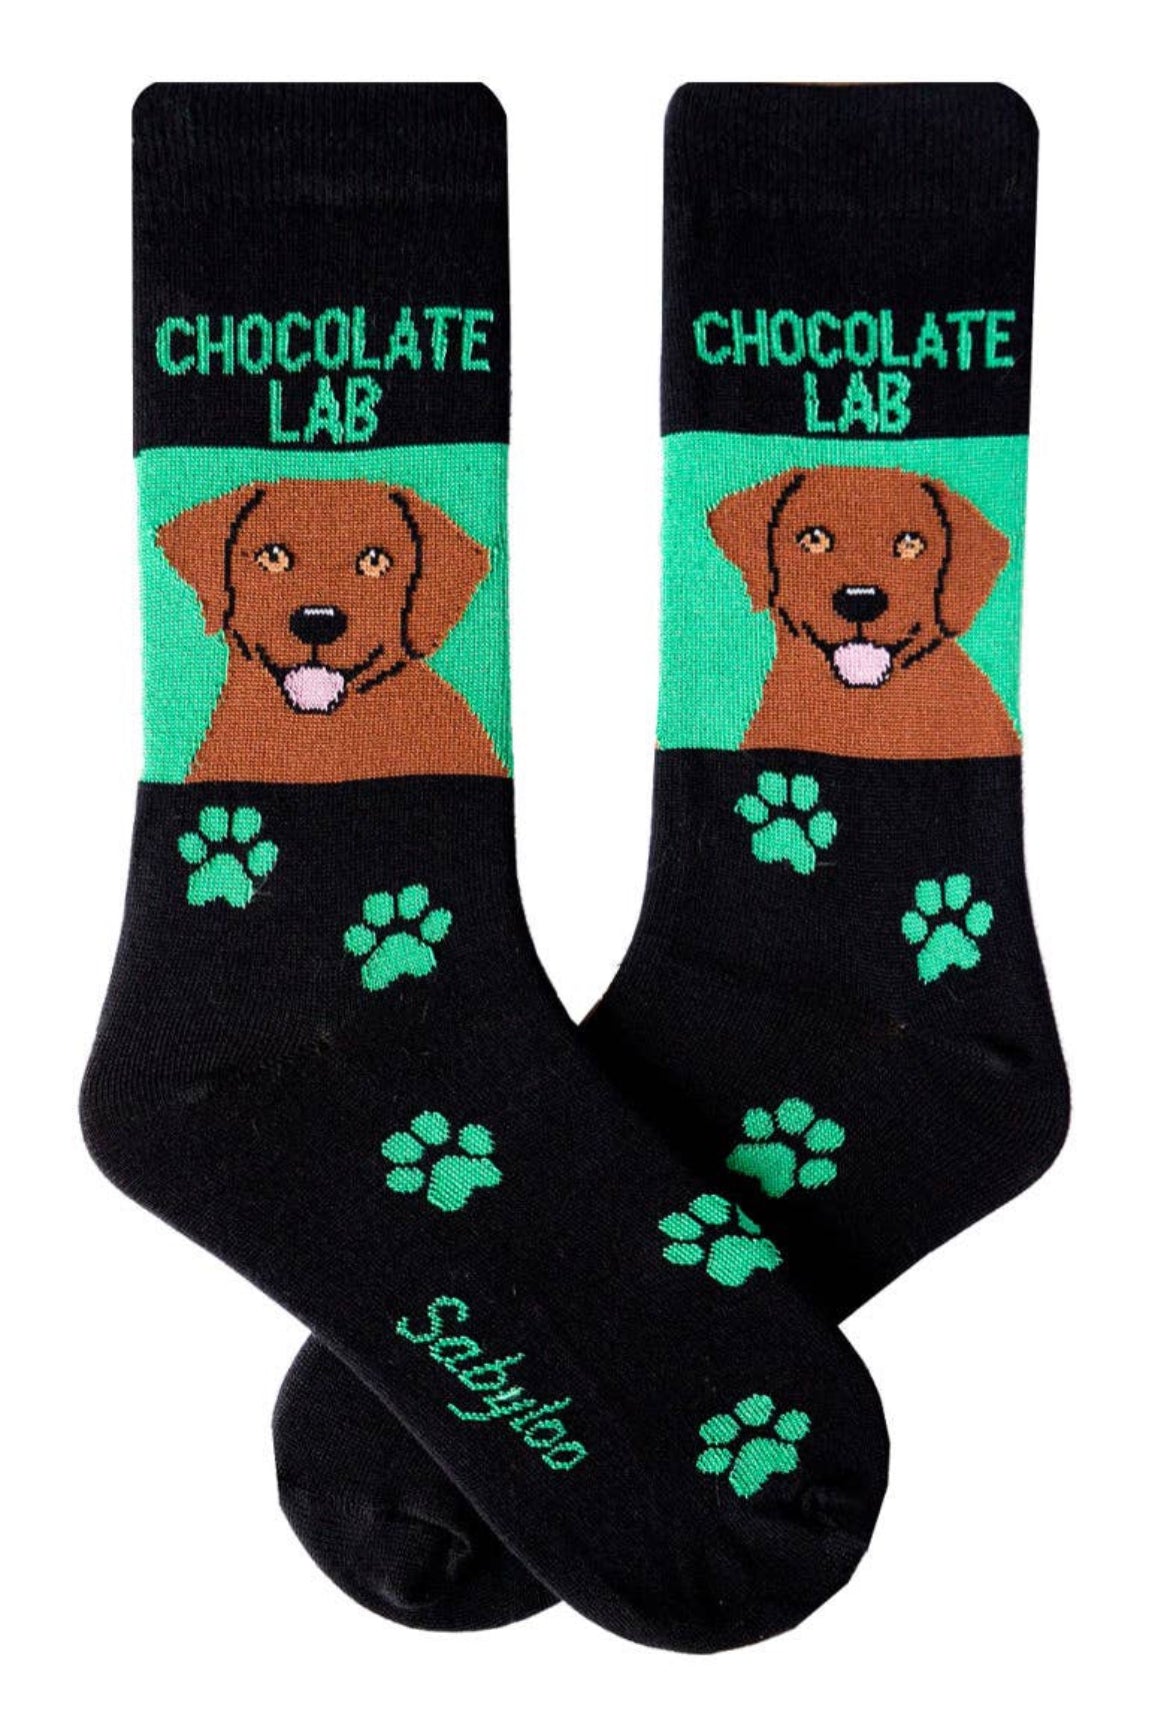 Chocolate Labrador Socks